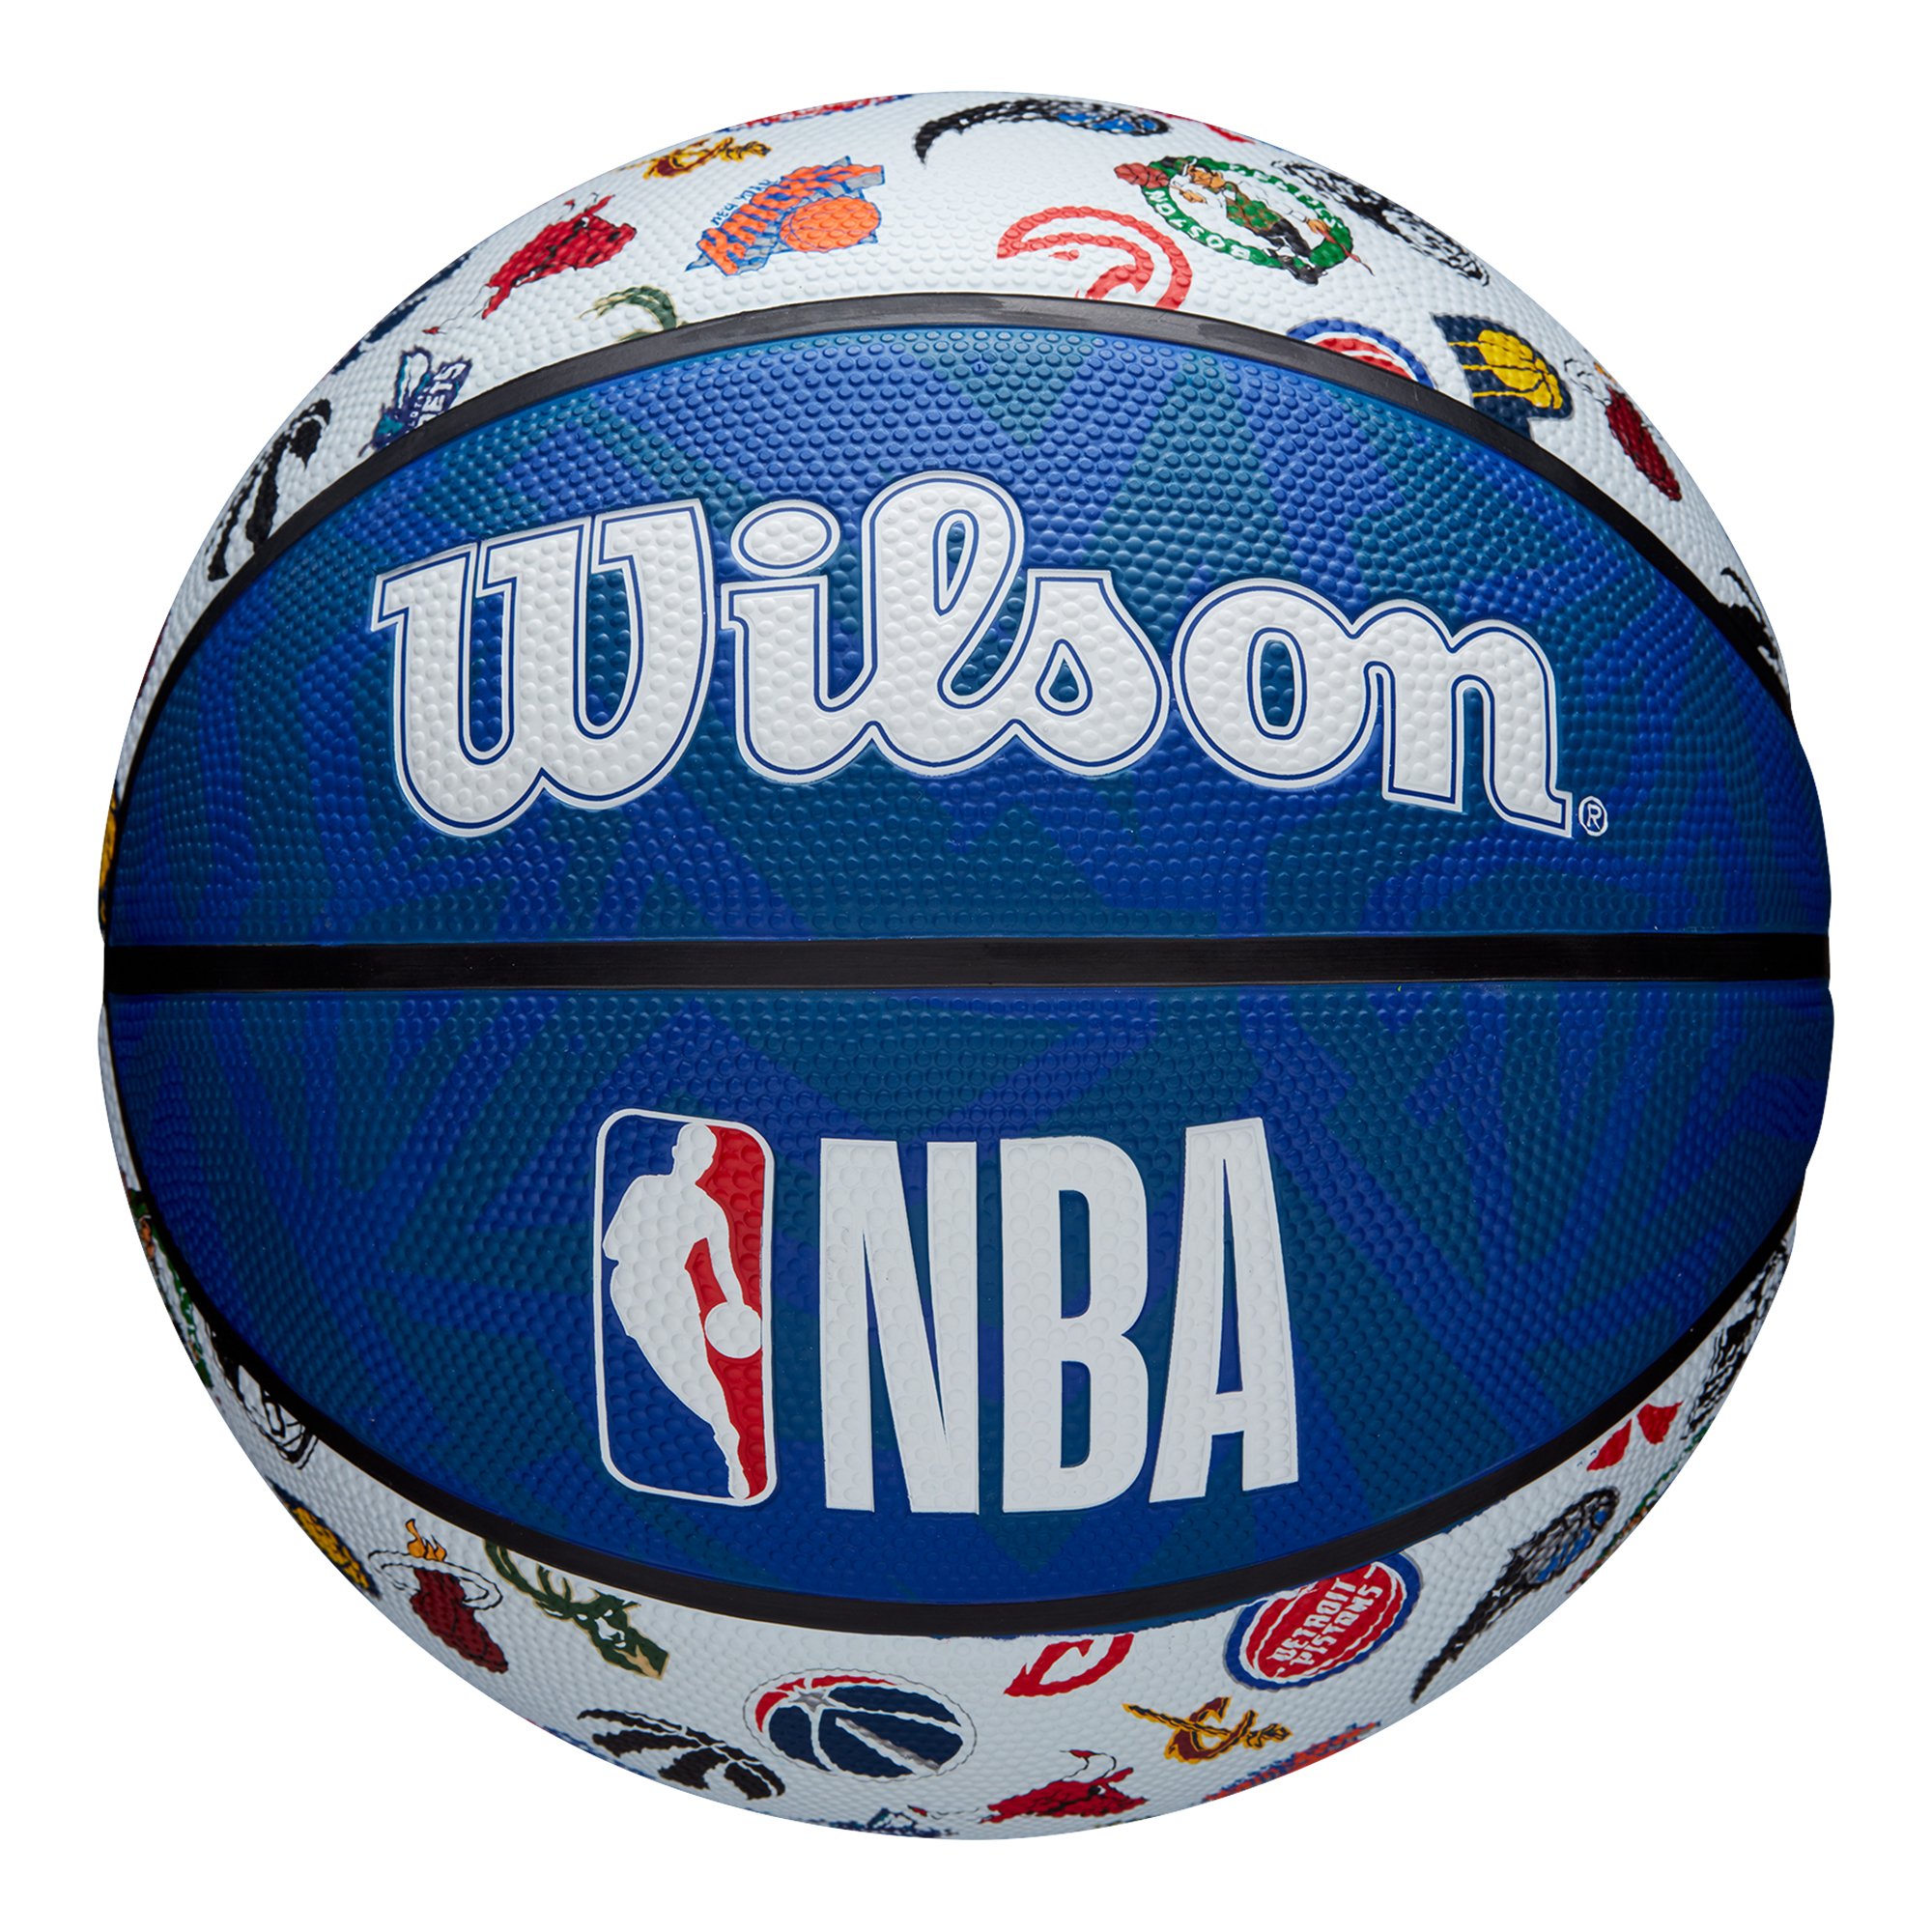 Wilson NBA All Team Basketball